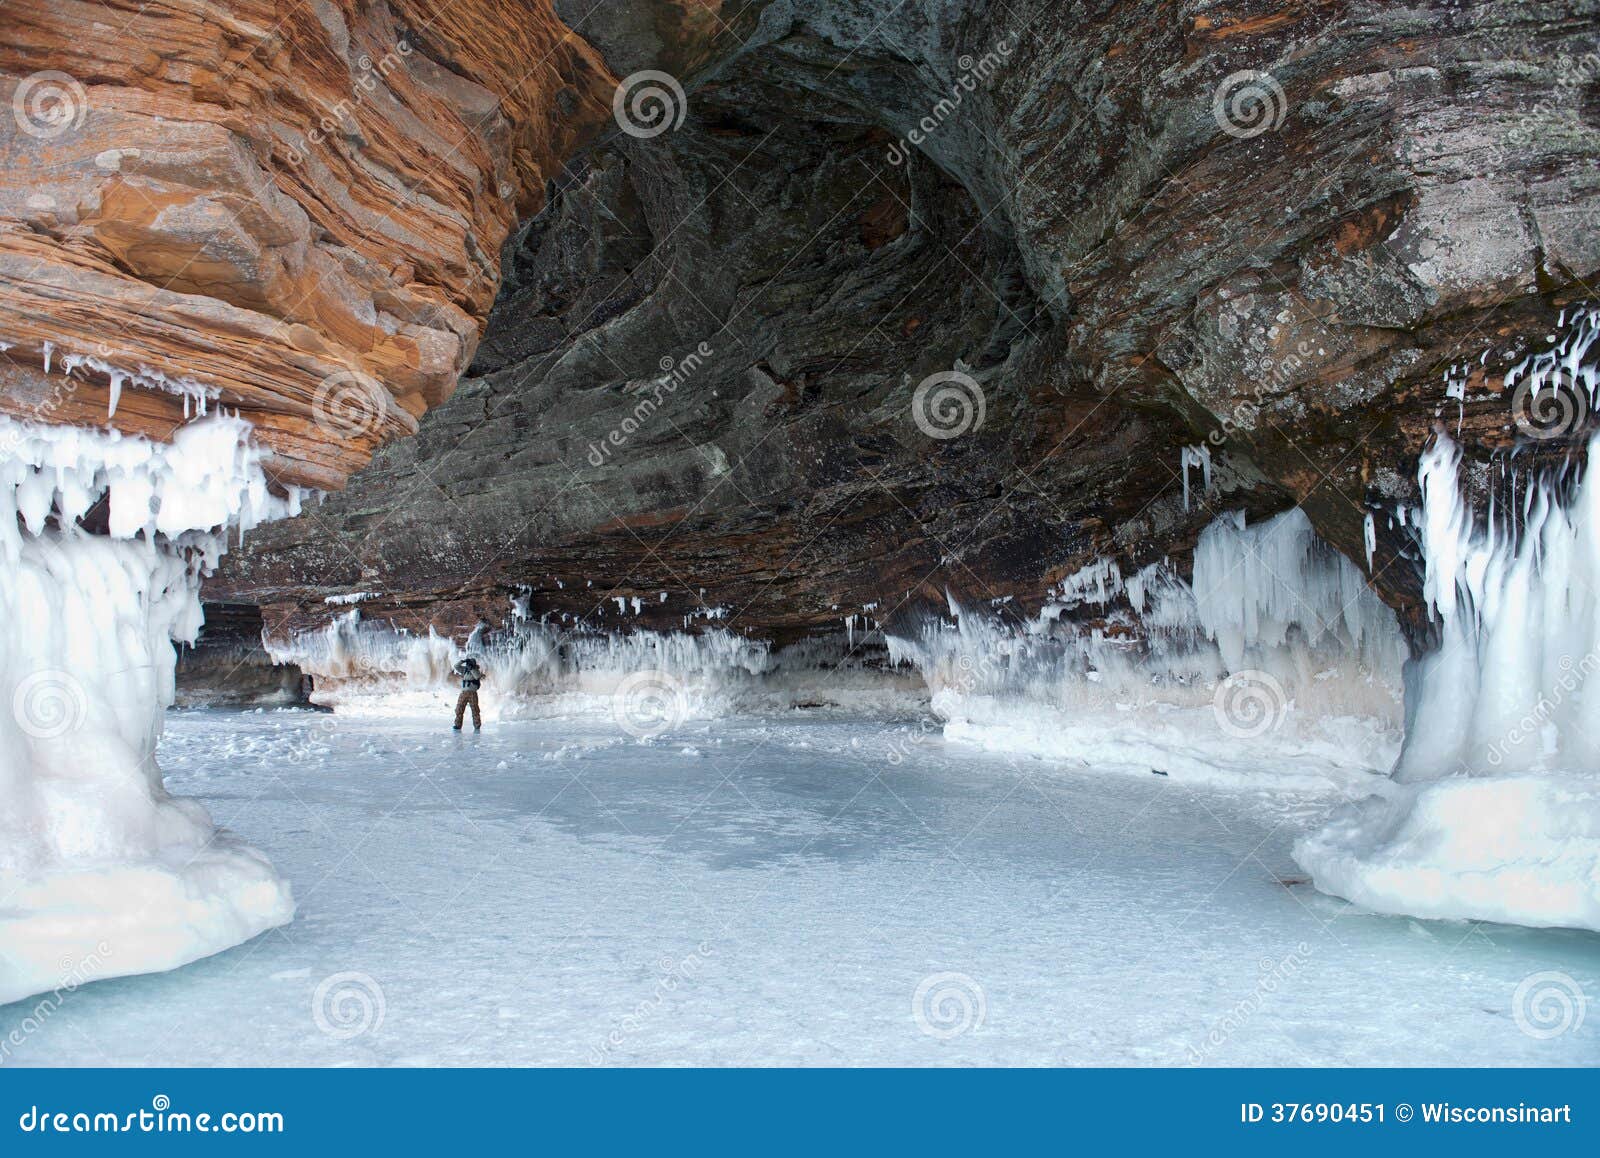 apostle islands ice caves, winter season